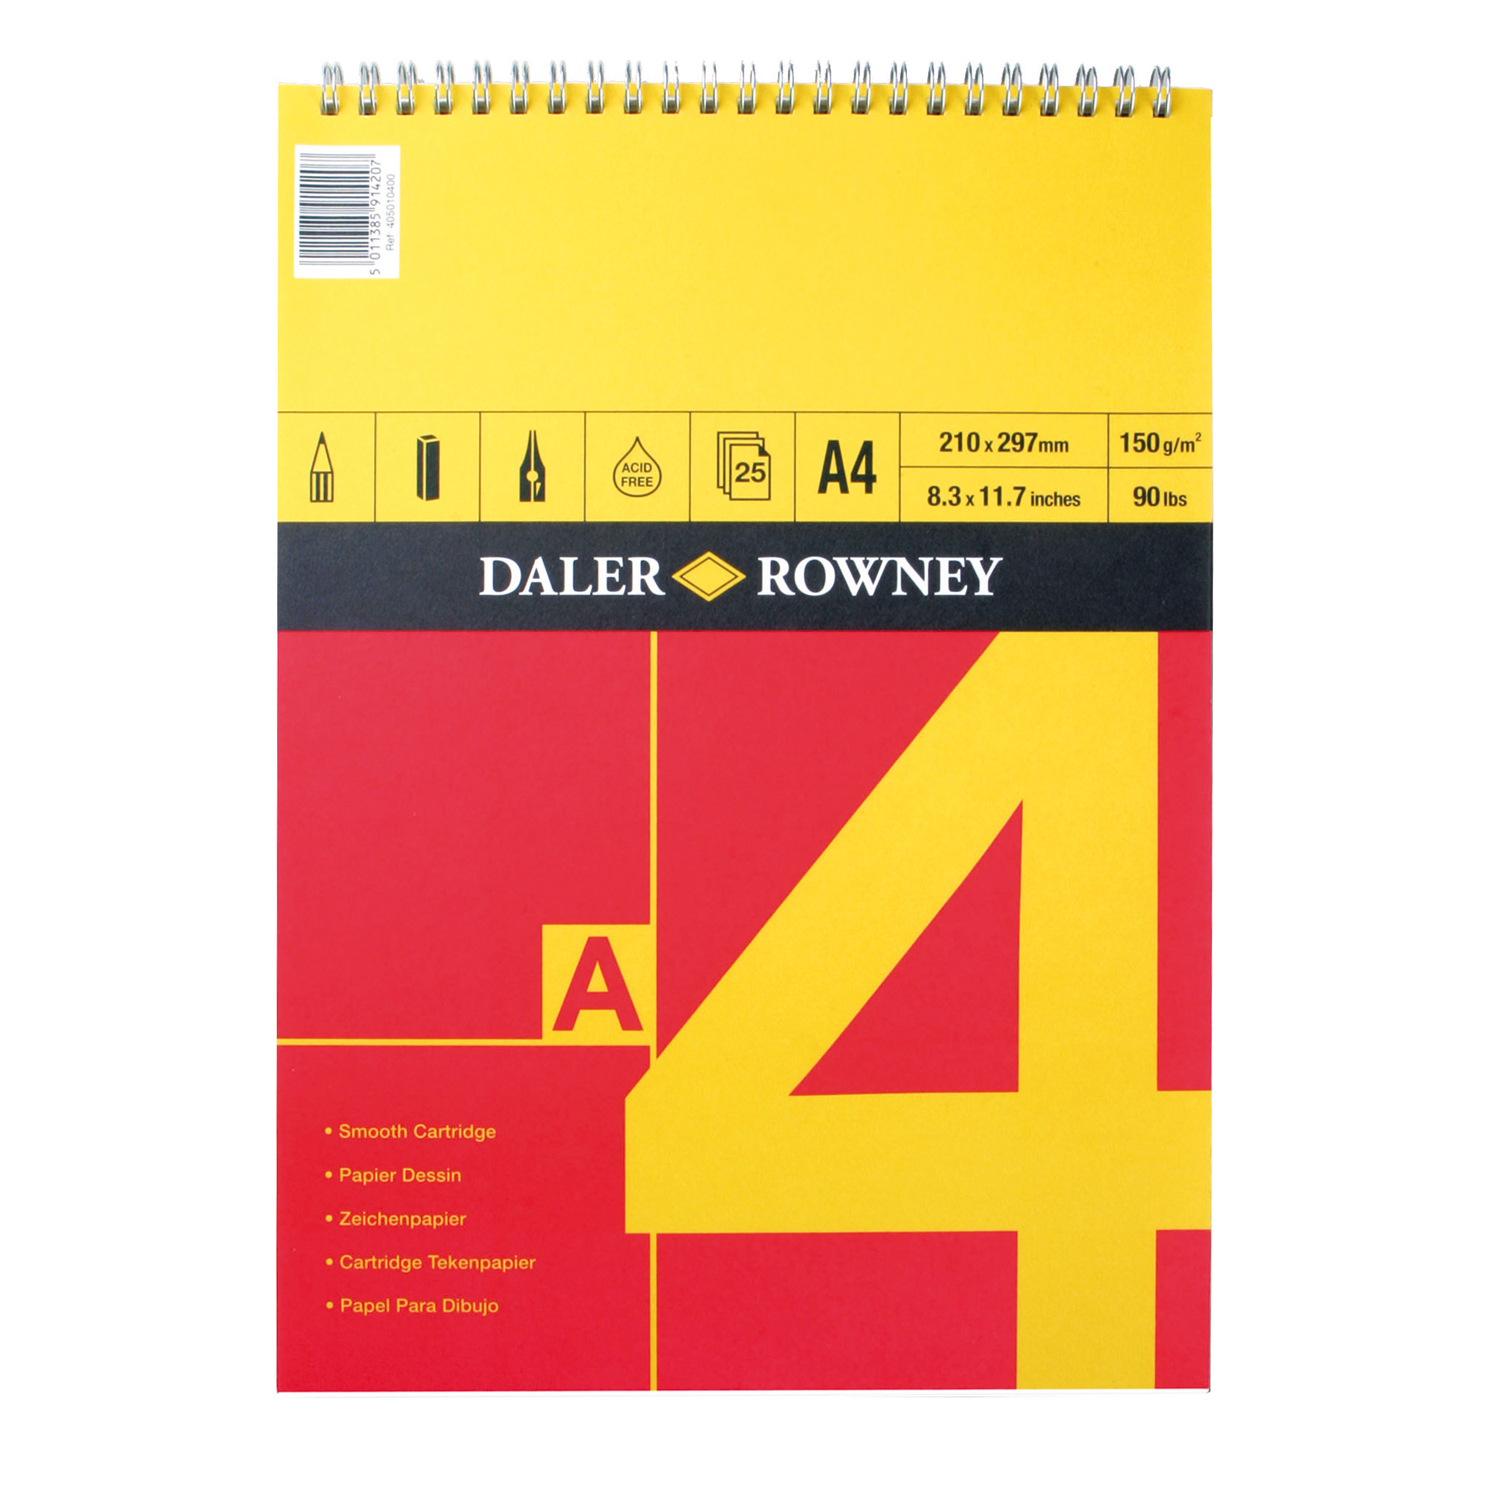 Daler-Rowney Cartridge Spiral Pad - White / A4 Image